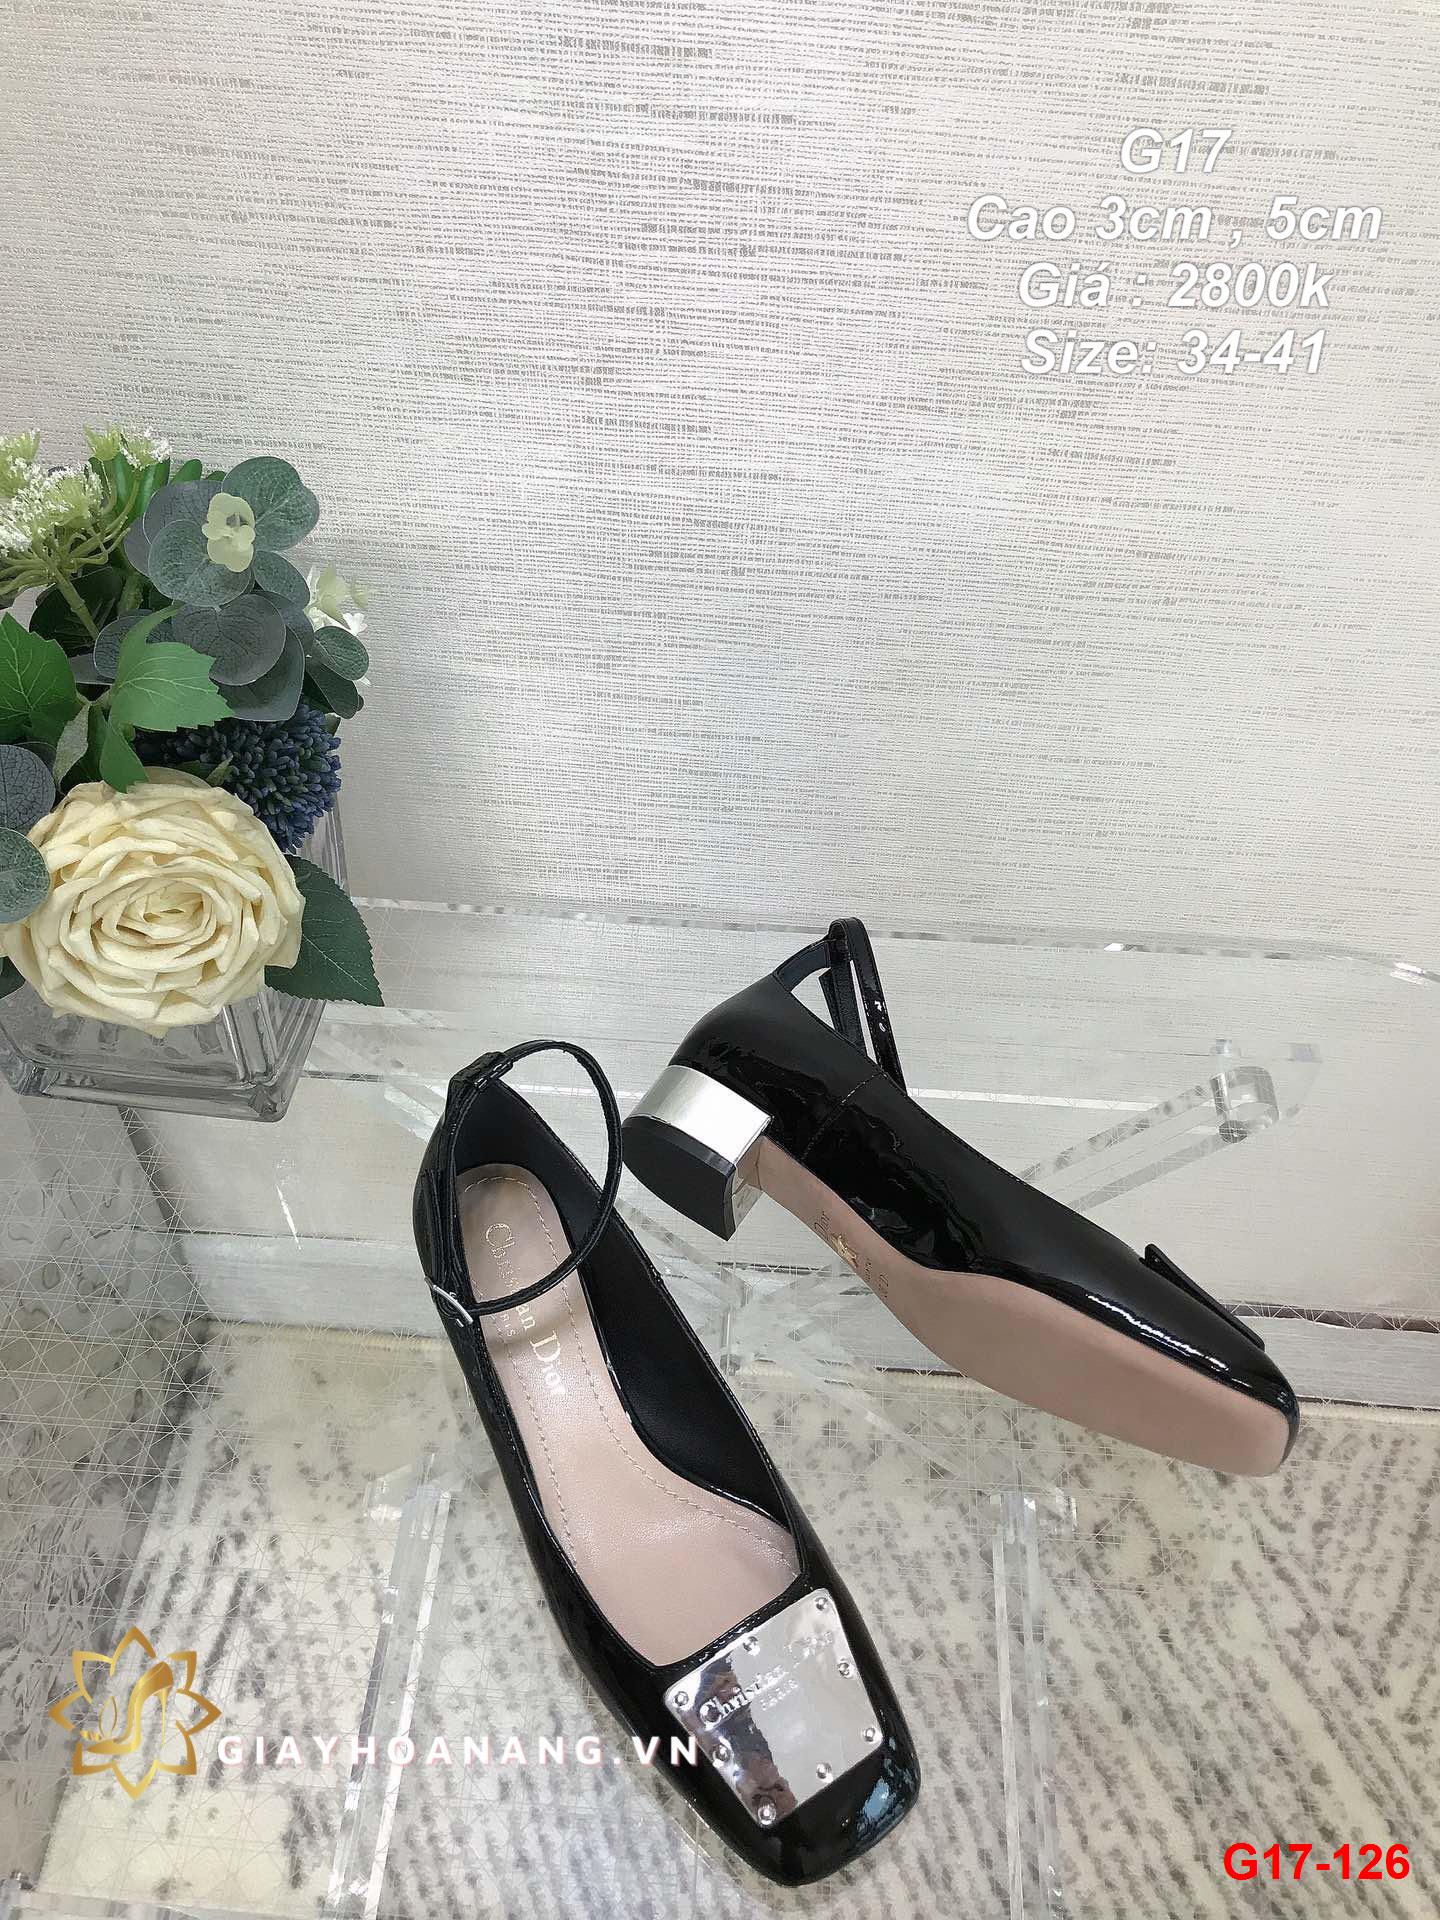 G17-126 Dior giày cao 3cm , 5cm siêu cấp